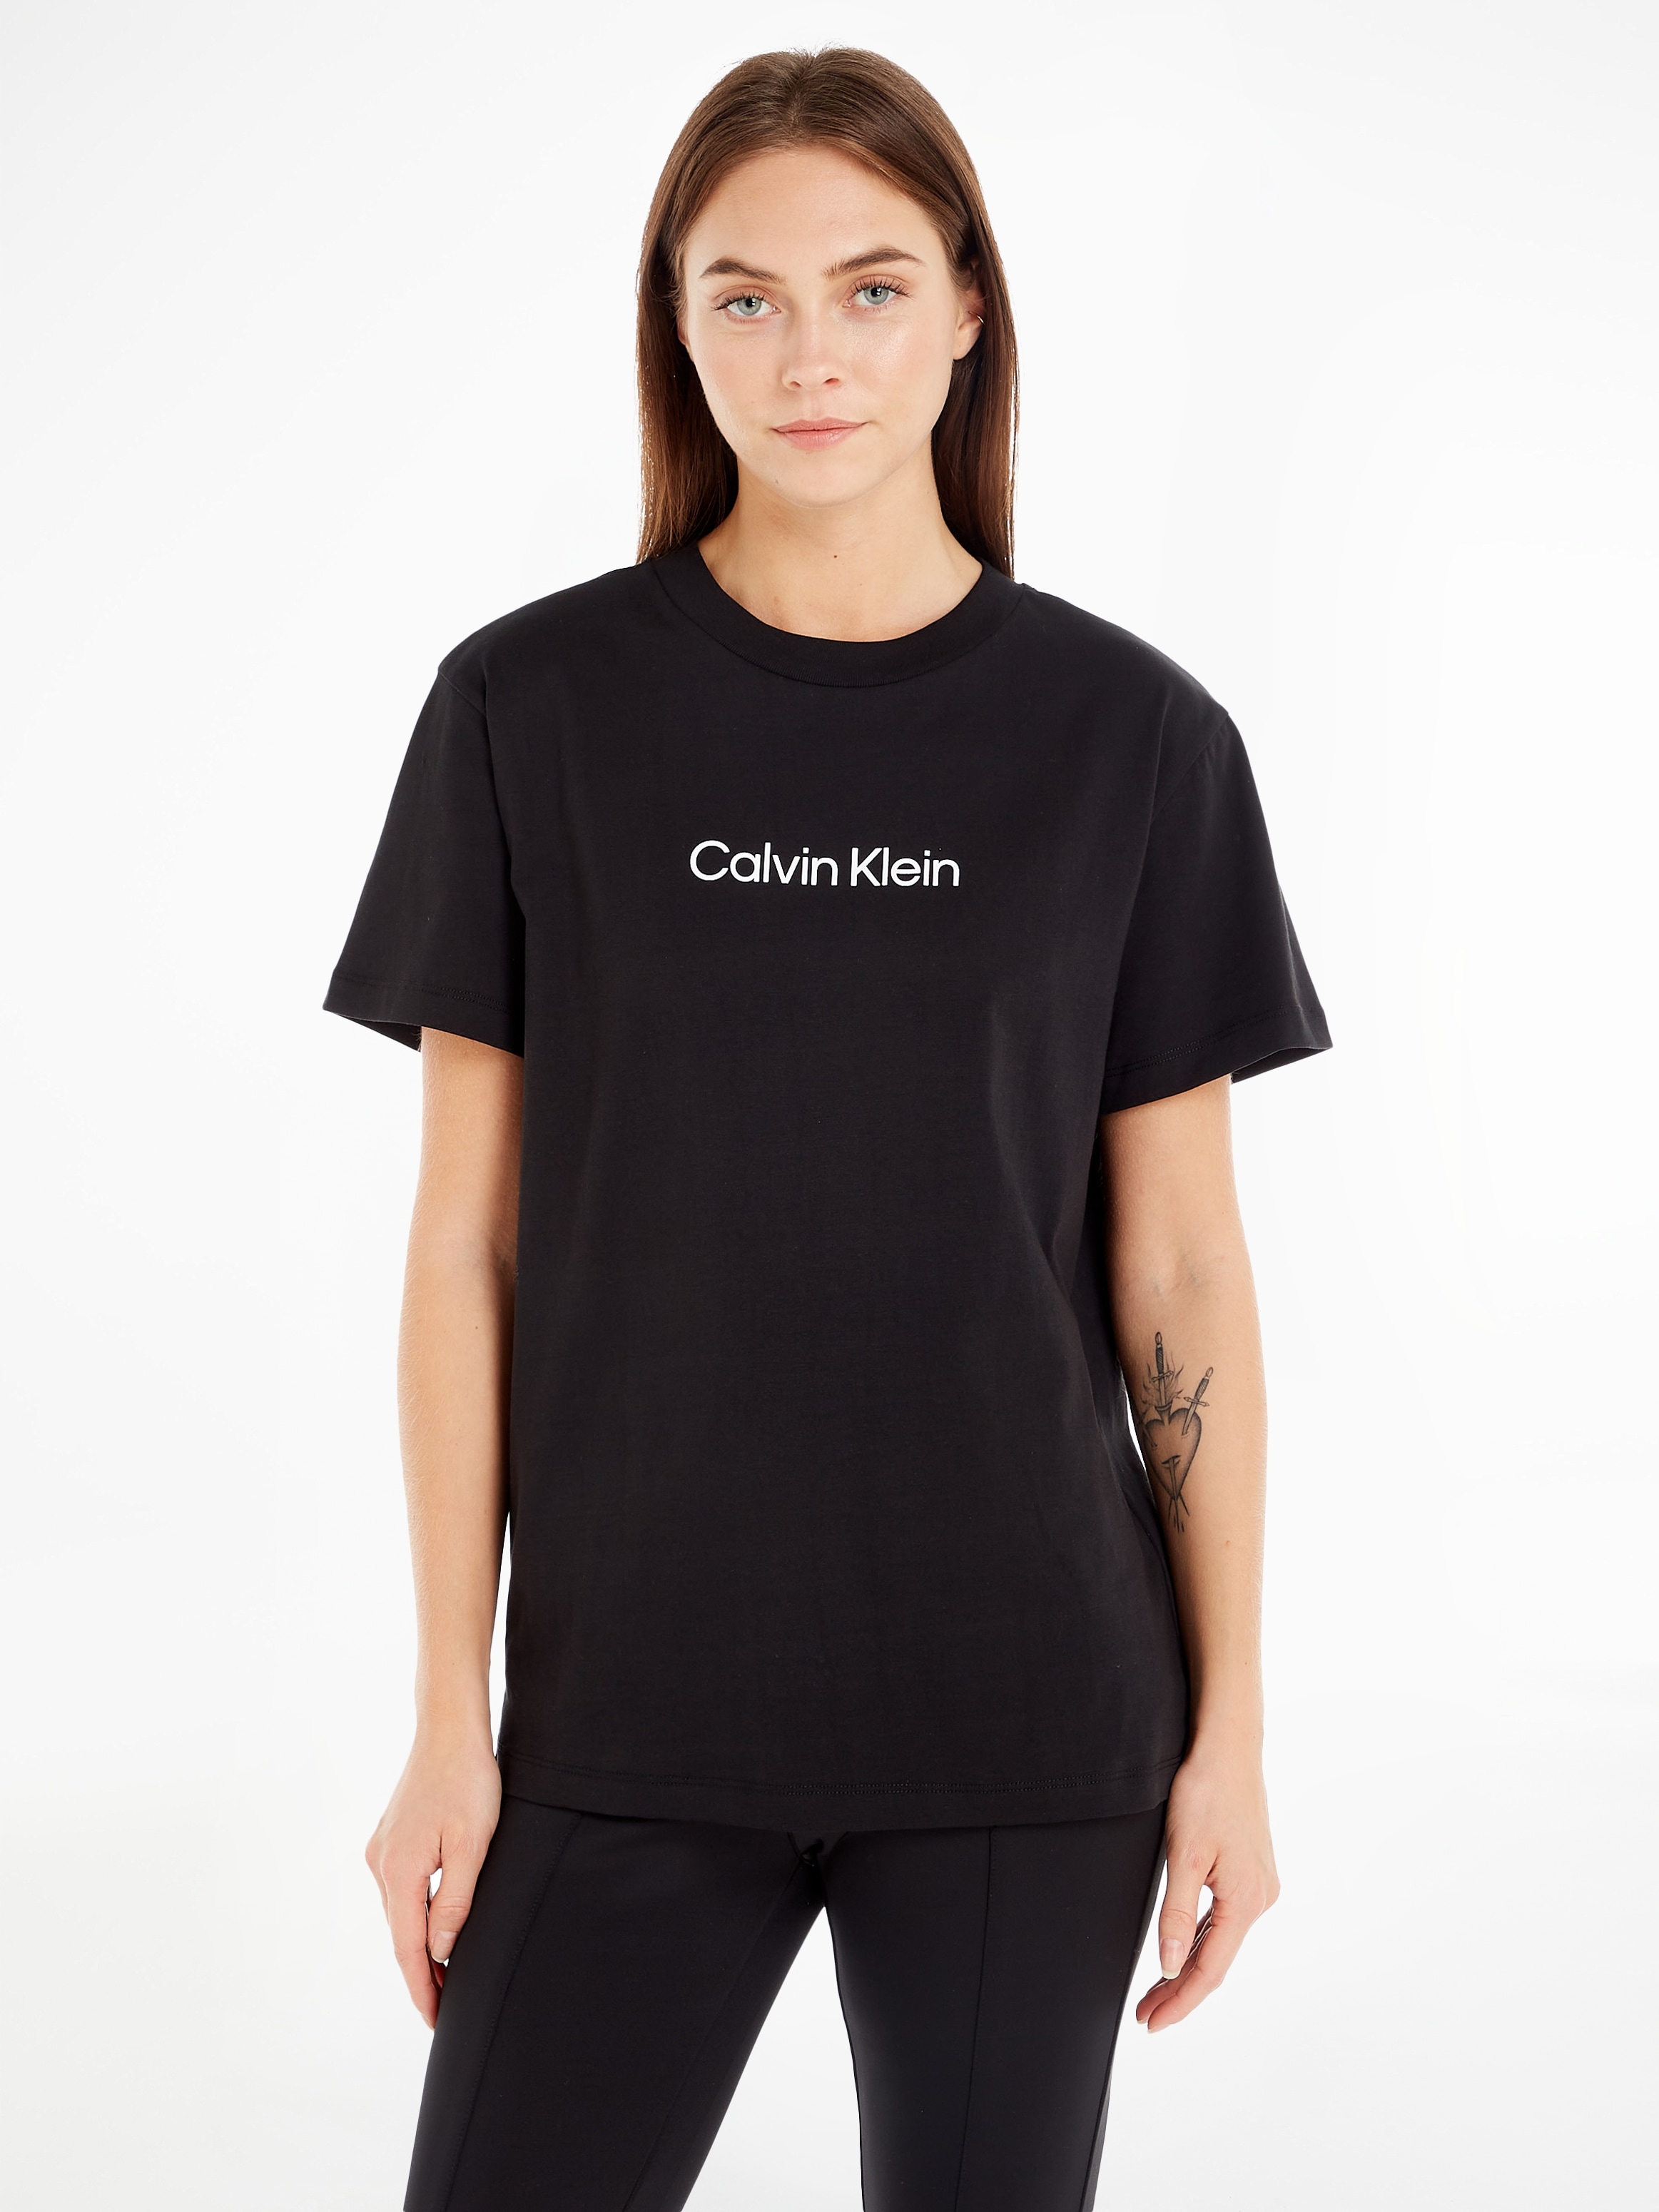 »Shirt T-Shirt REGULAR« LOGO HERO Klein kaufen Calvin